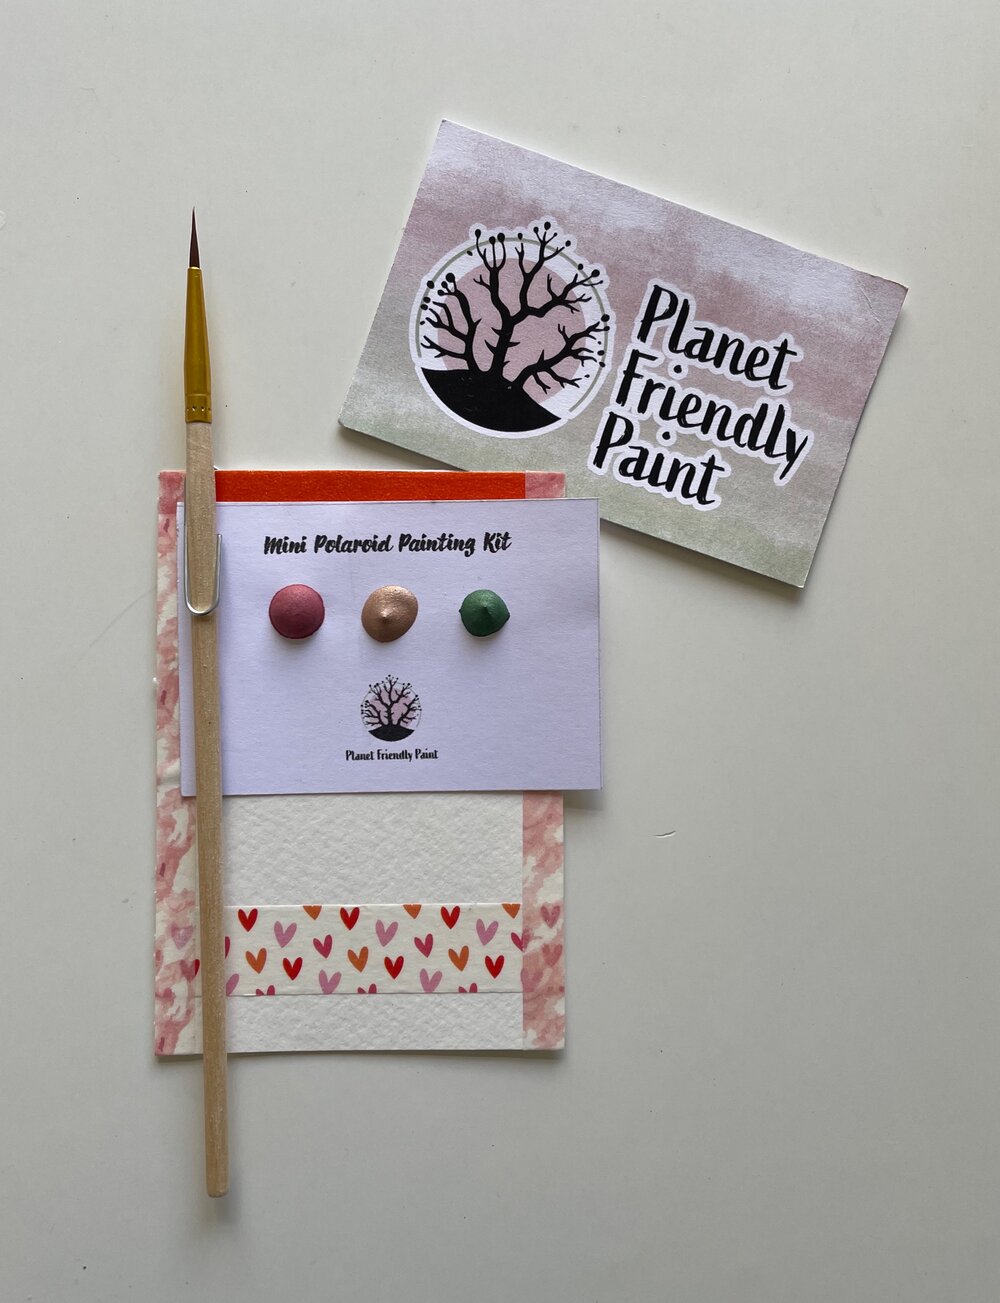 Mini Polaroid Painting Kit - 4 or 3 eco-colours! — Planet Friendly Paint